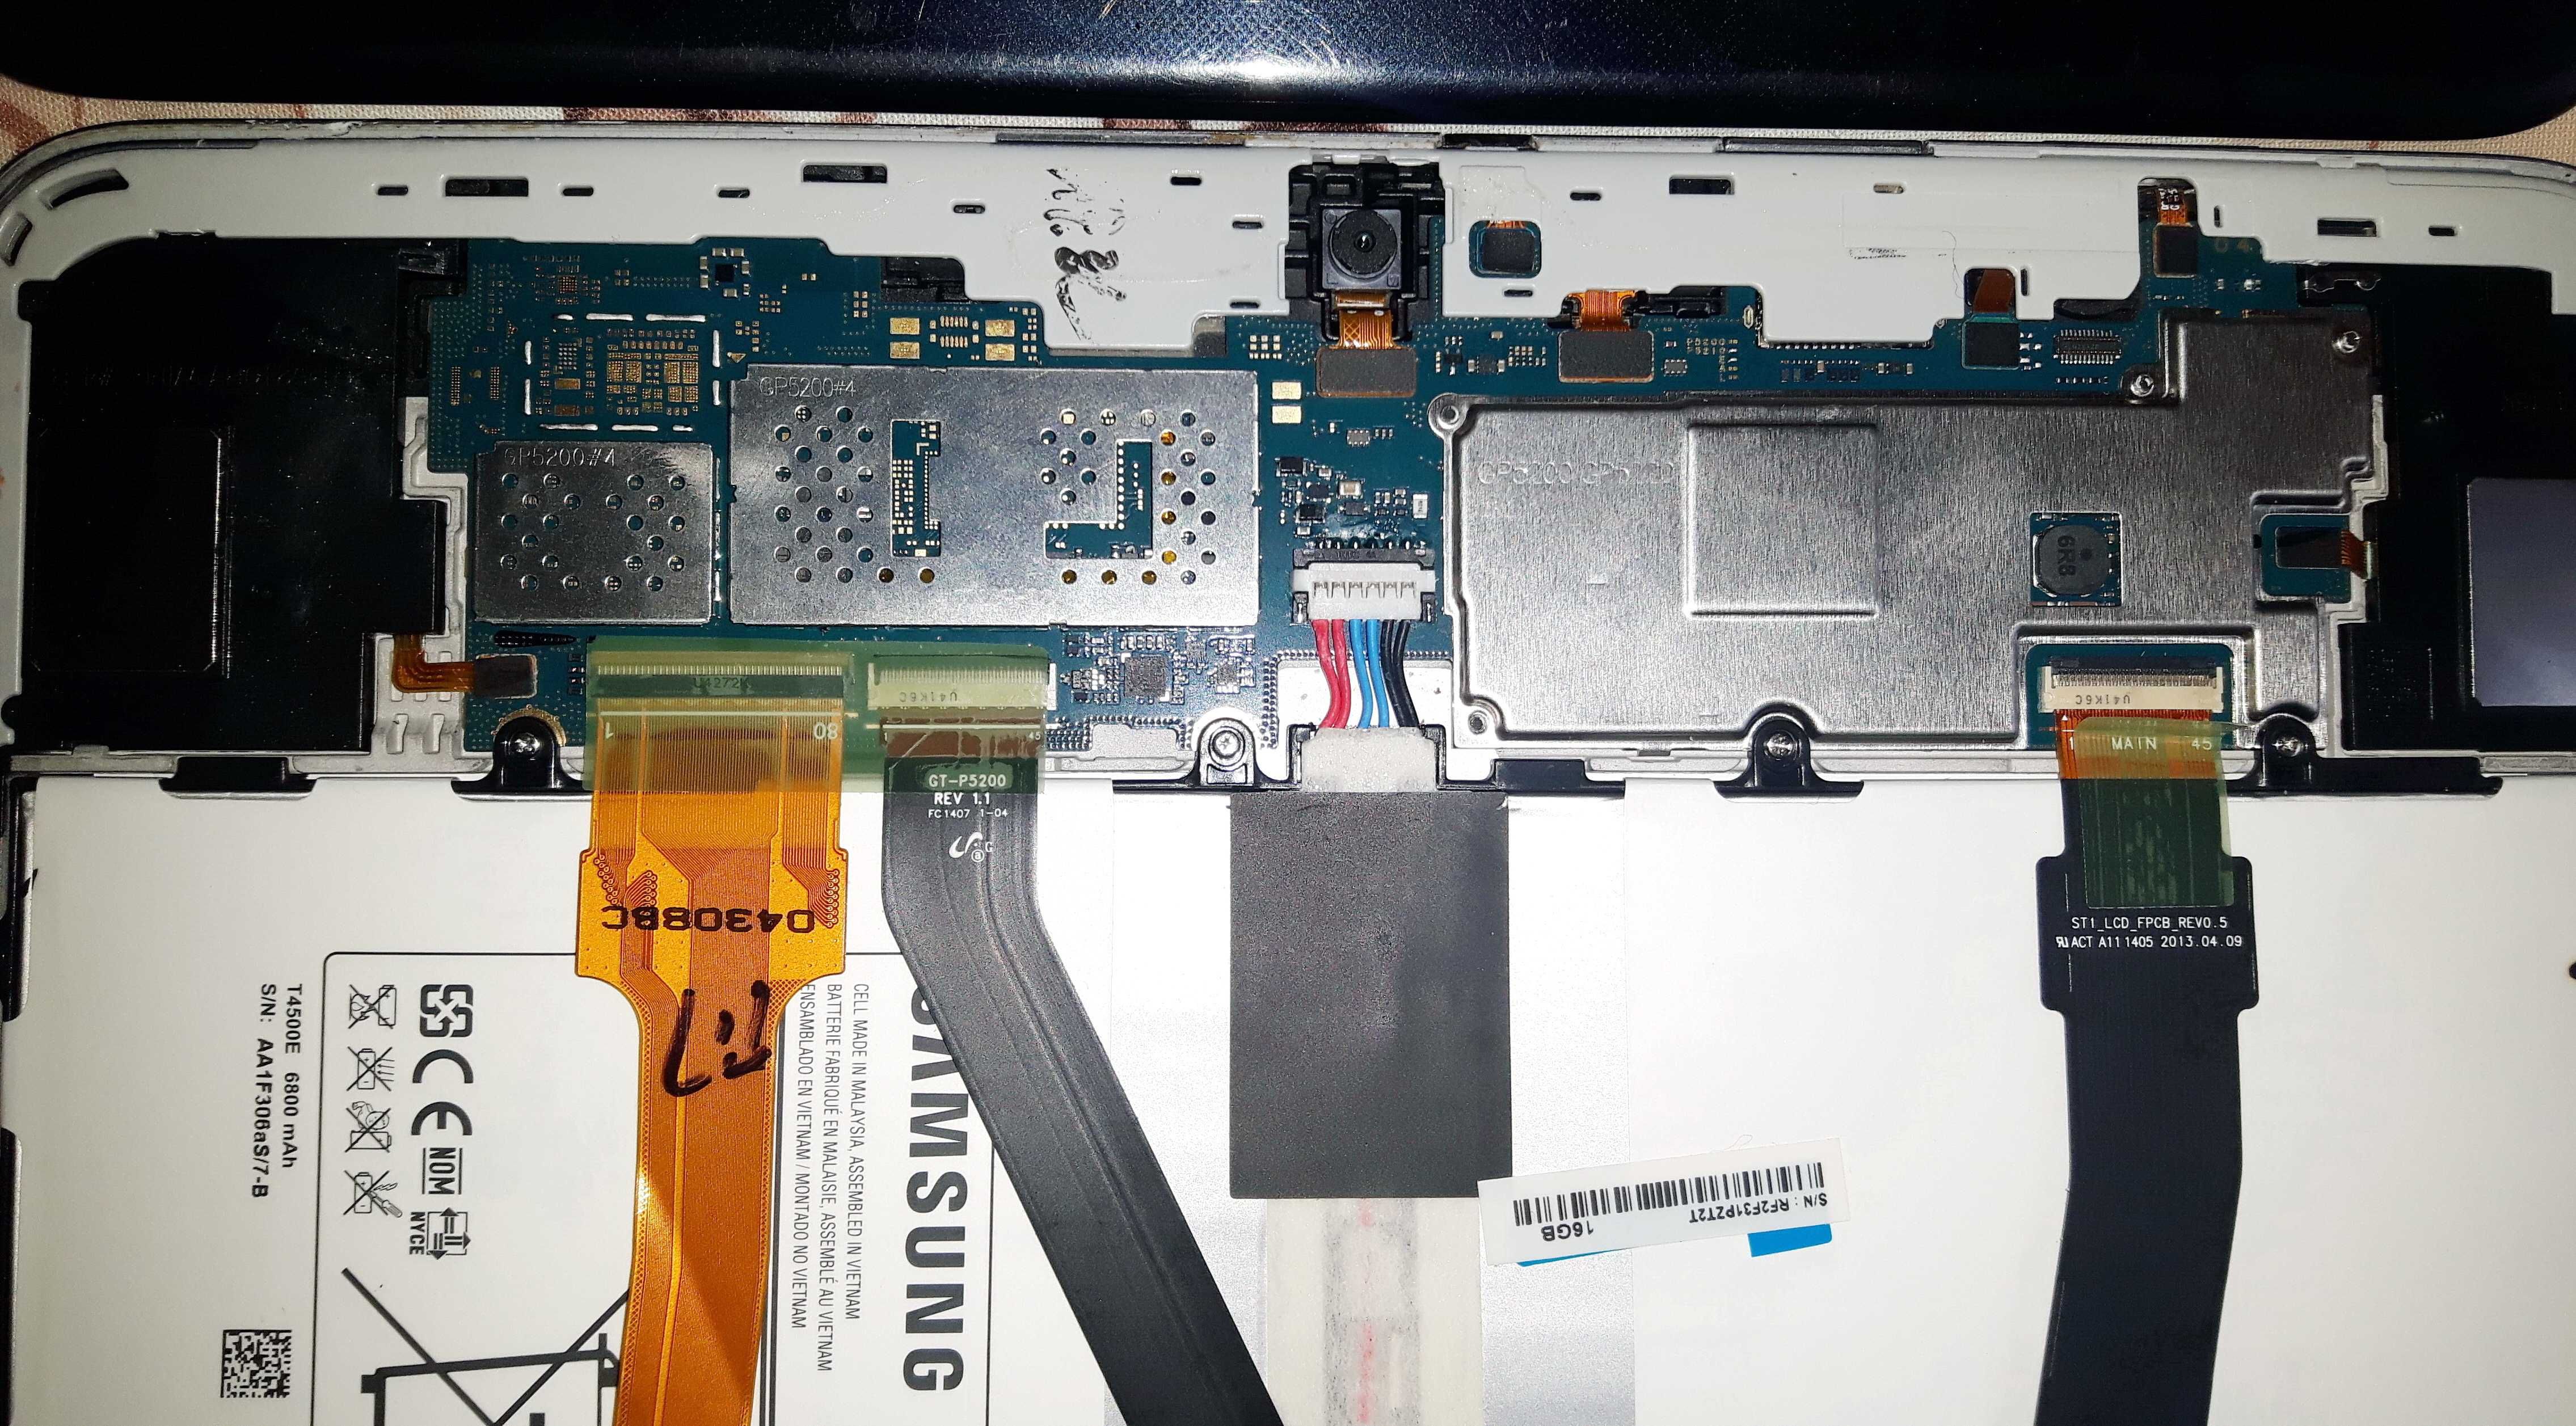 Планшет Samung Galaxy Tab 3 GT-P5210 под ремонт или на запчасти